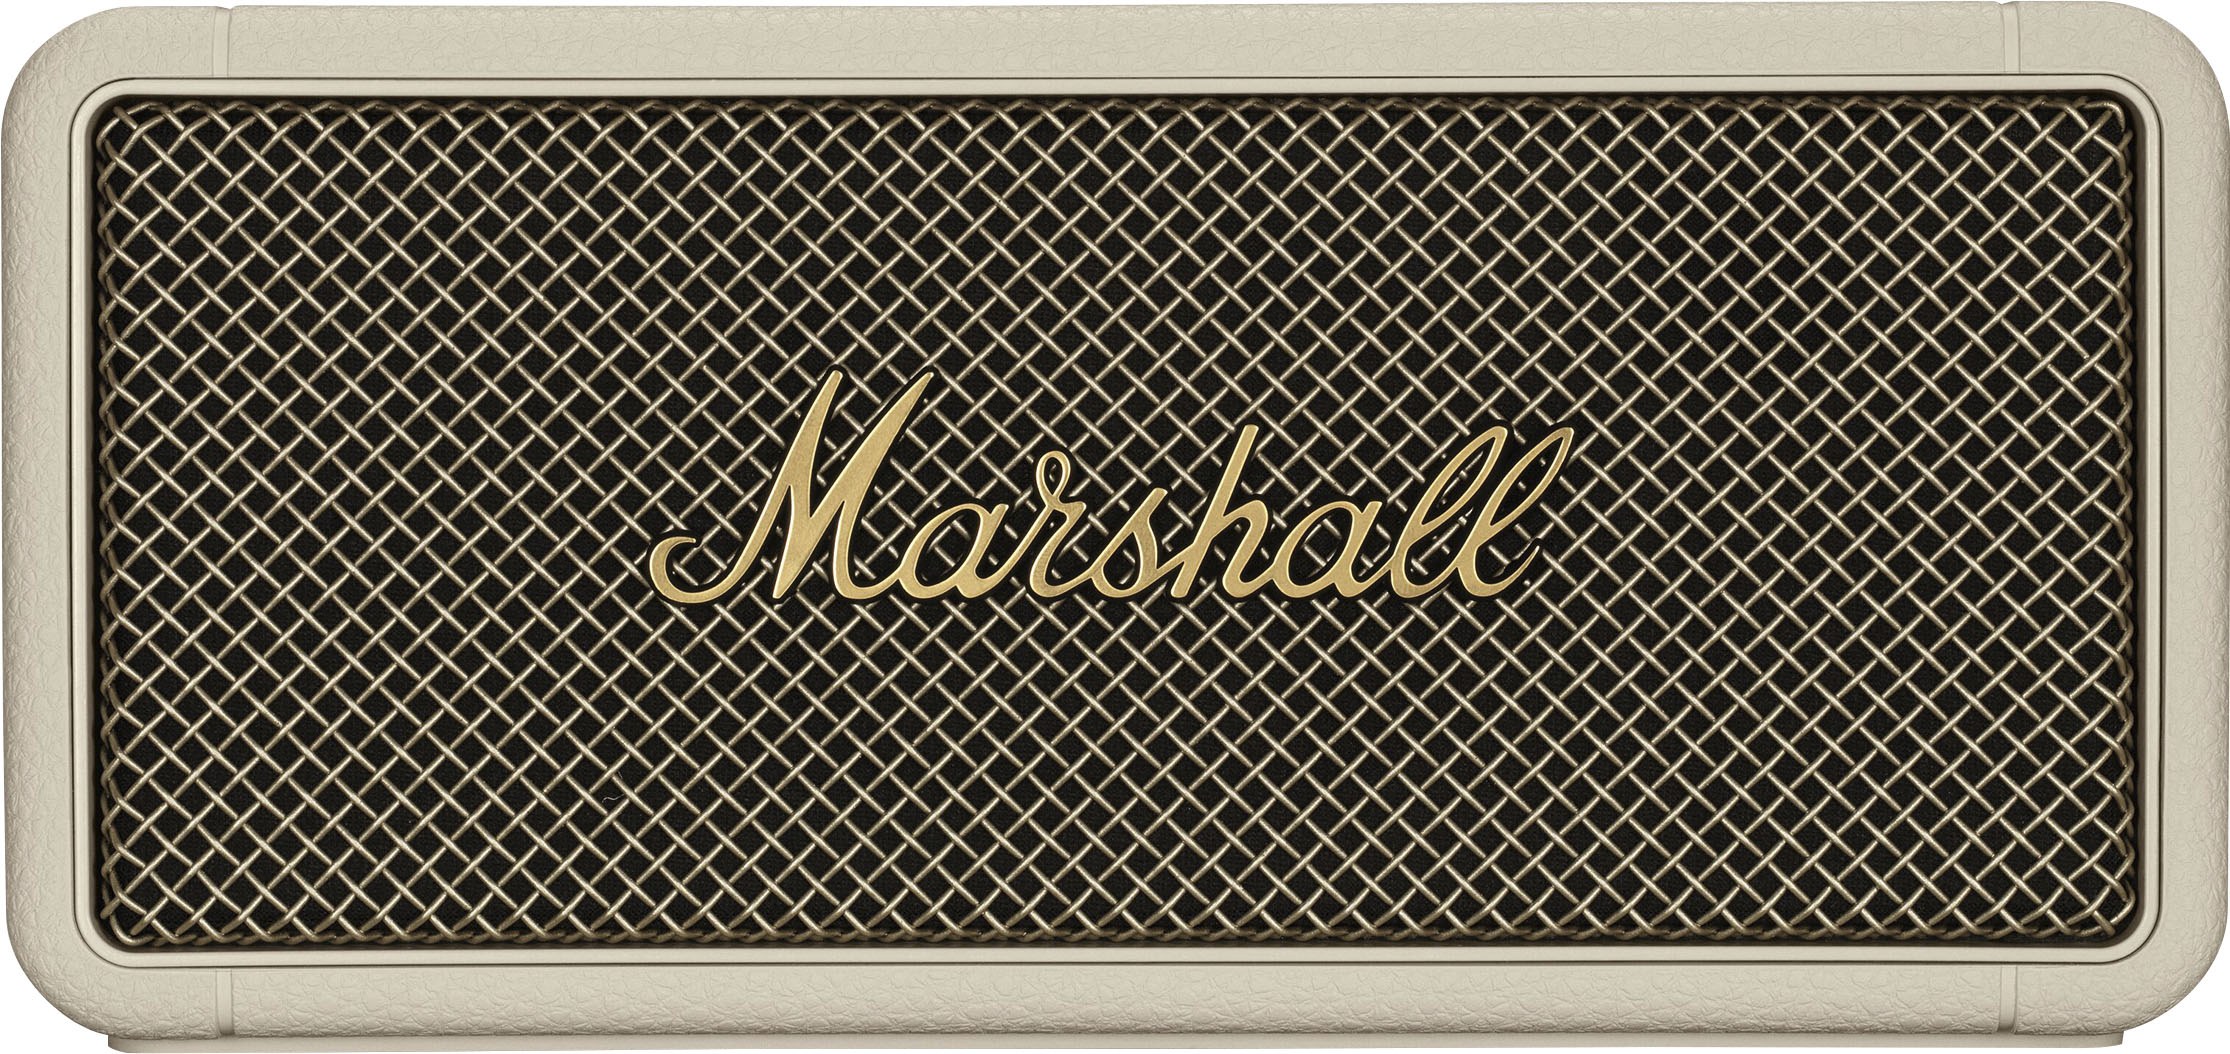 Cream - Buy II Marshall Bluetooth 1006237 Speaker Best Emberton